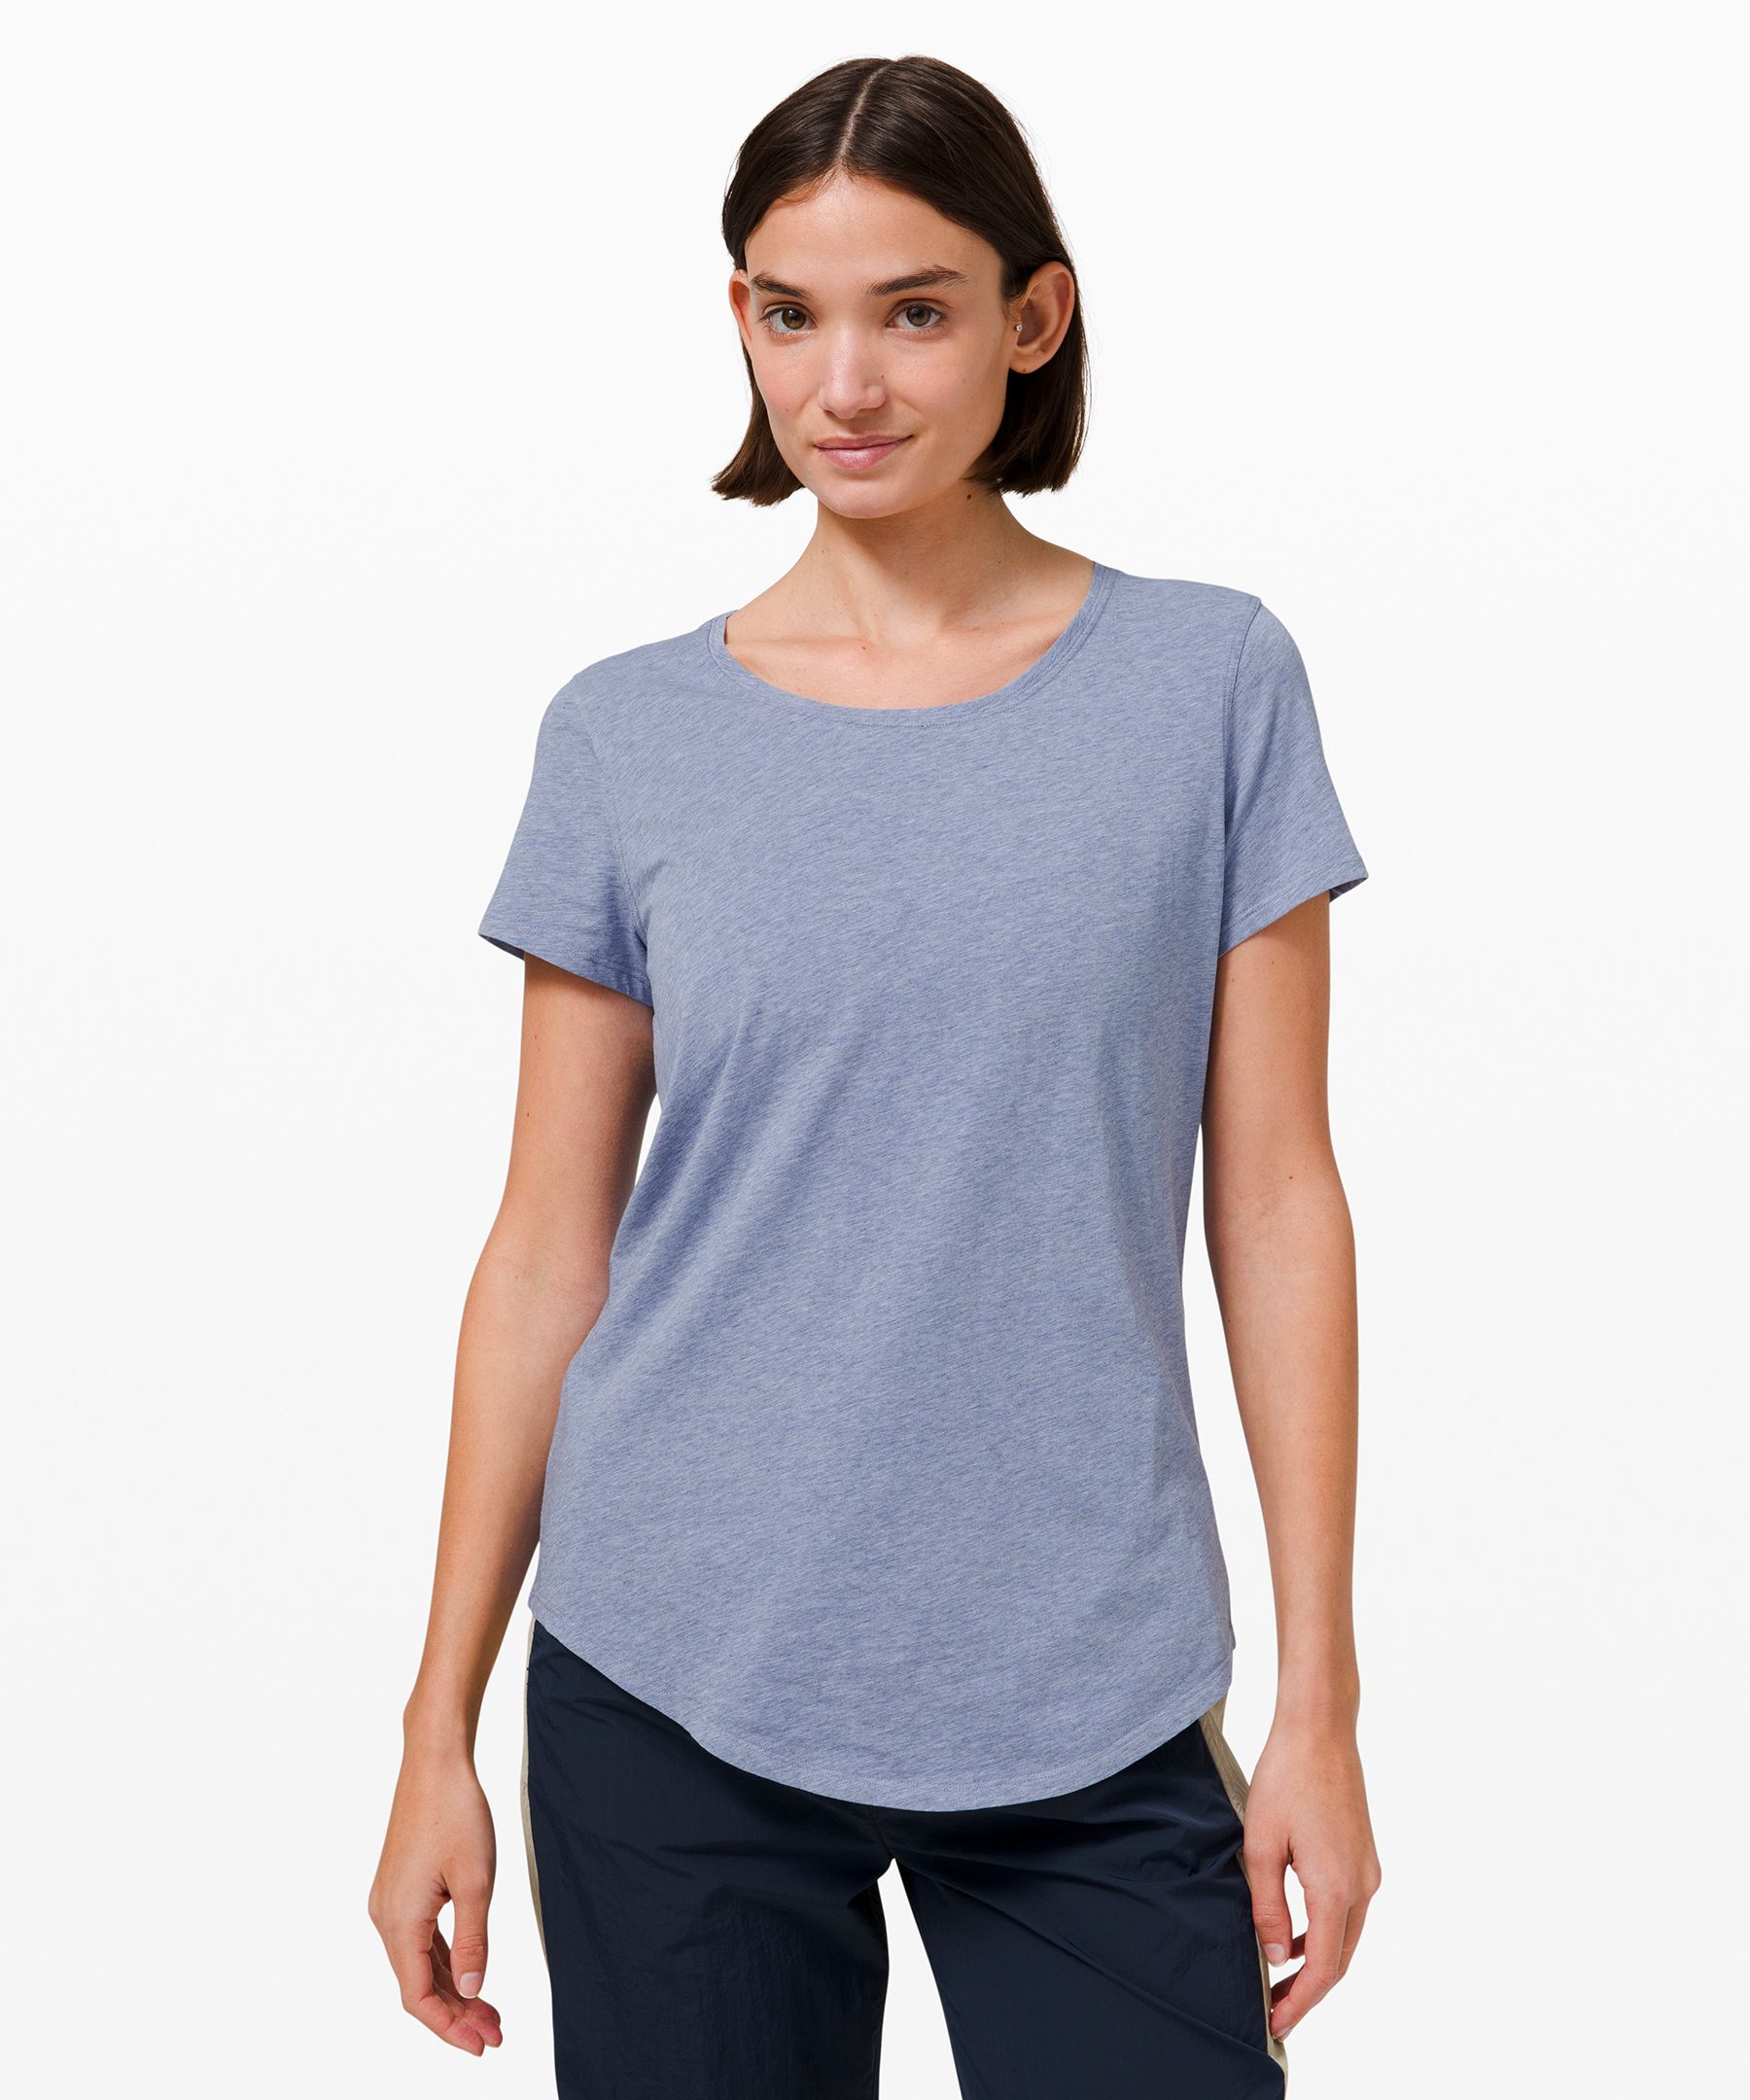 Lululemon Love Crew Short Sleeve T-shirt Lightweight In Heathered Water Drop